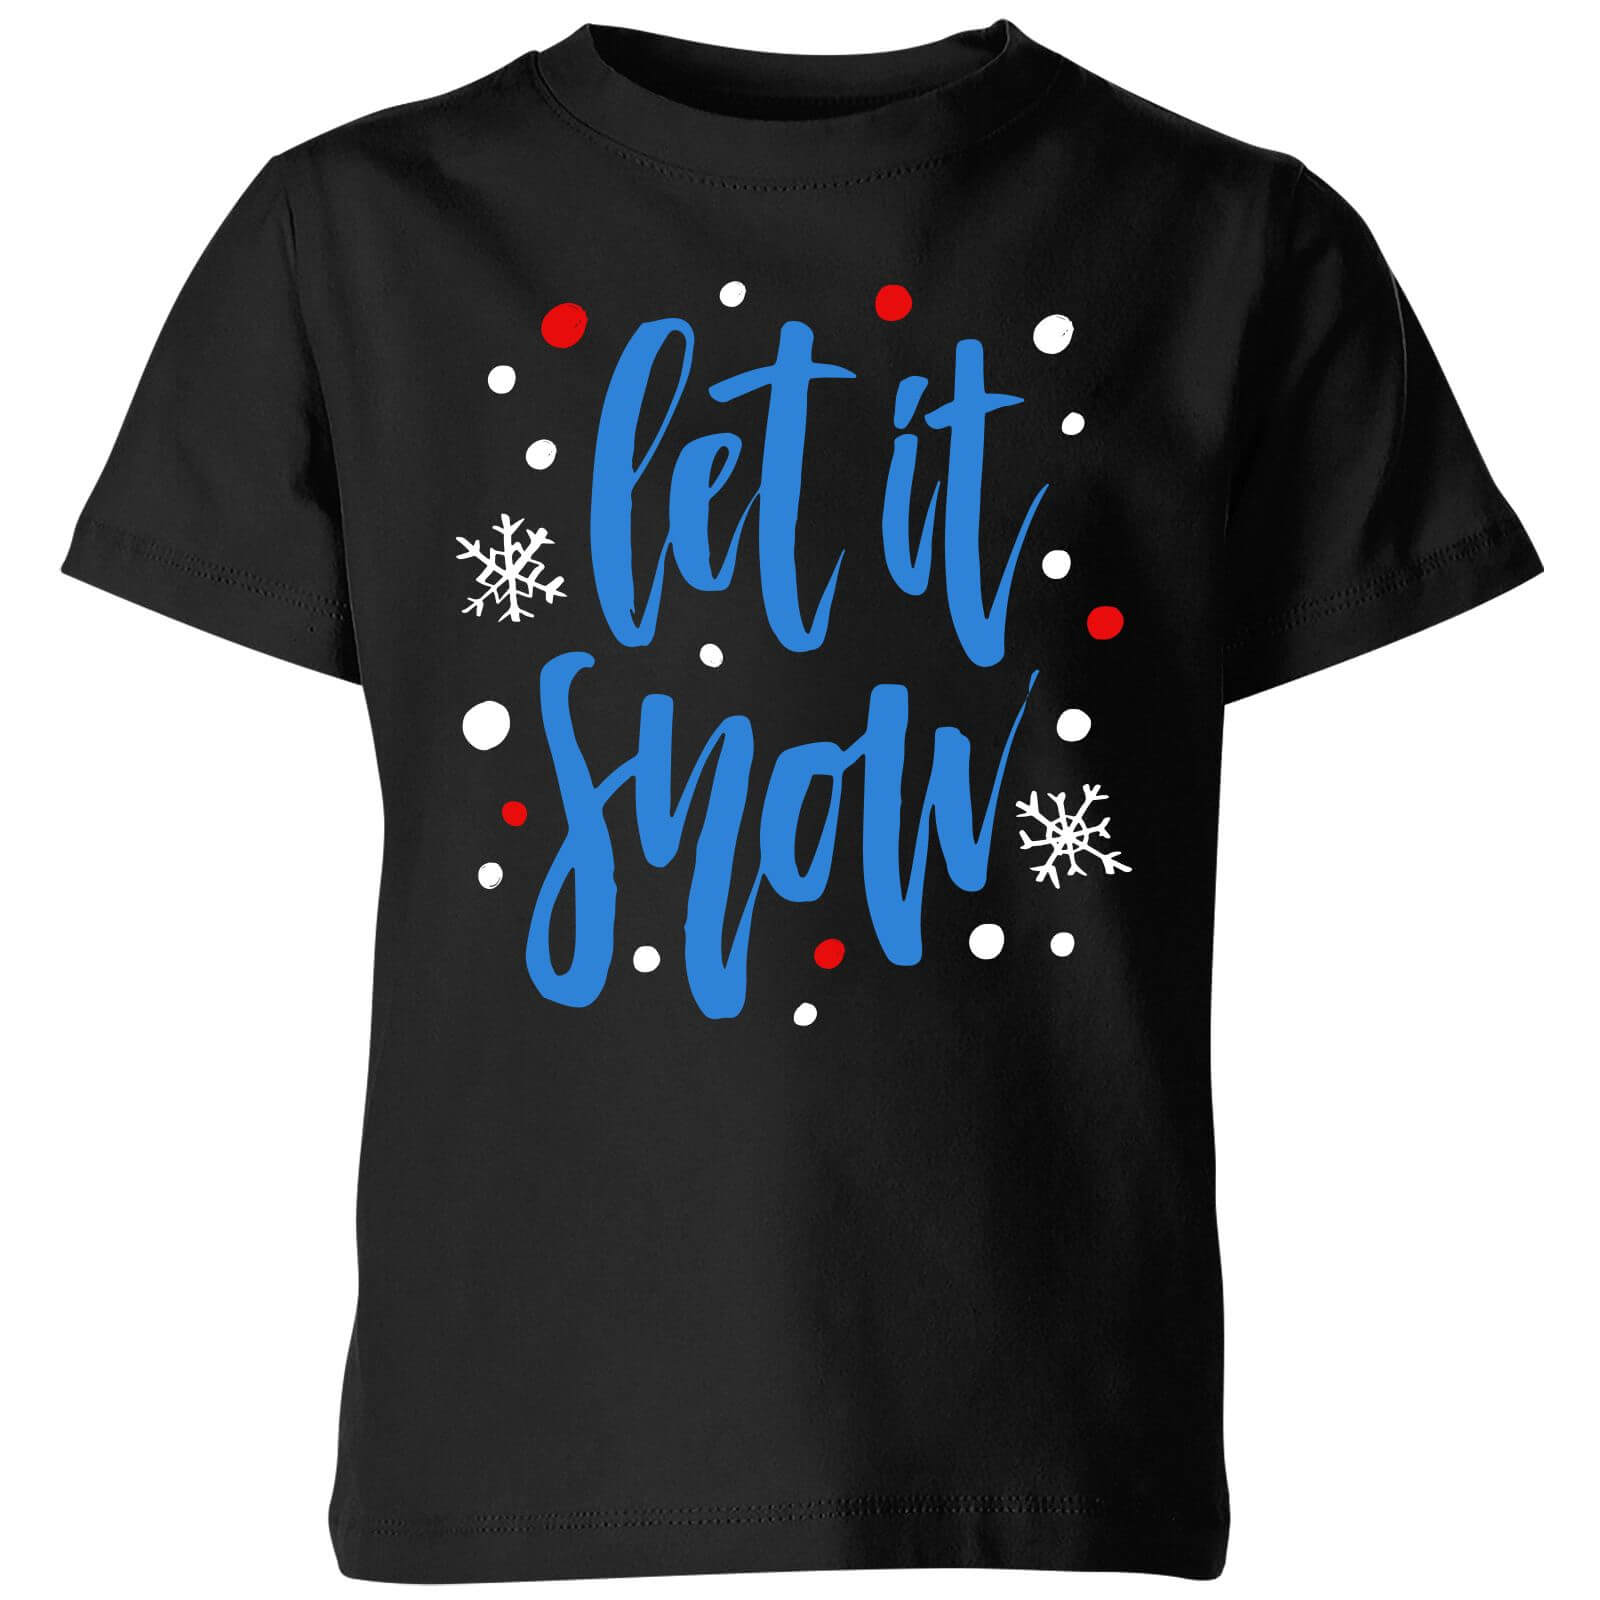 Let it Snow Kids' T-Shirt - Black - 3-4 Years - Black